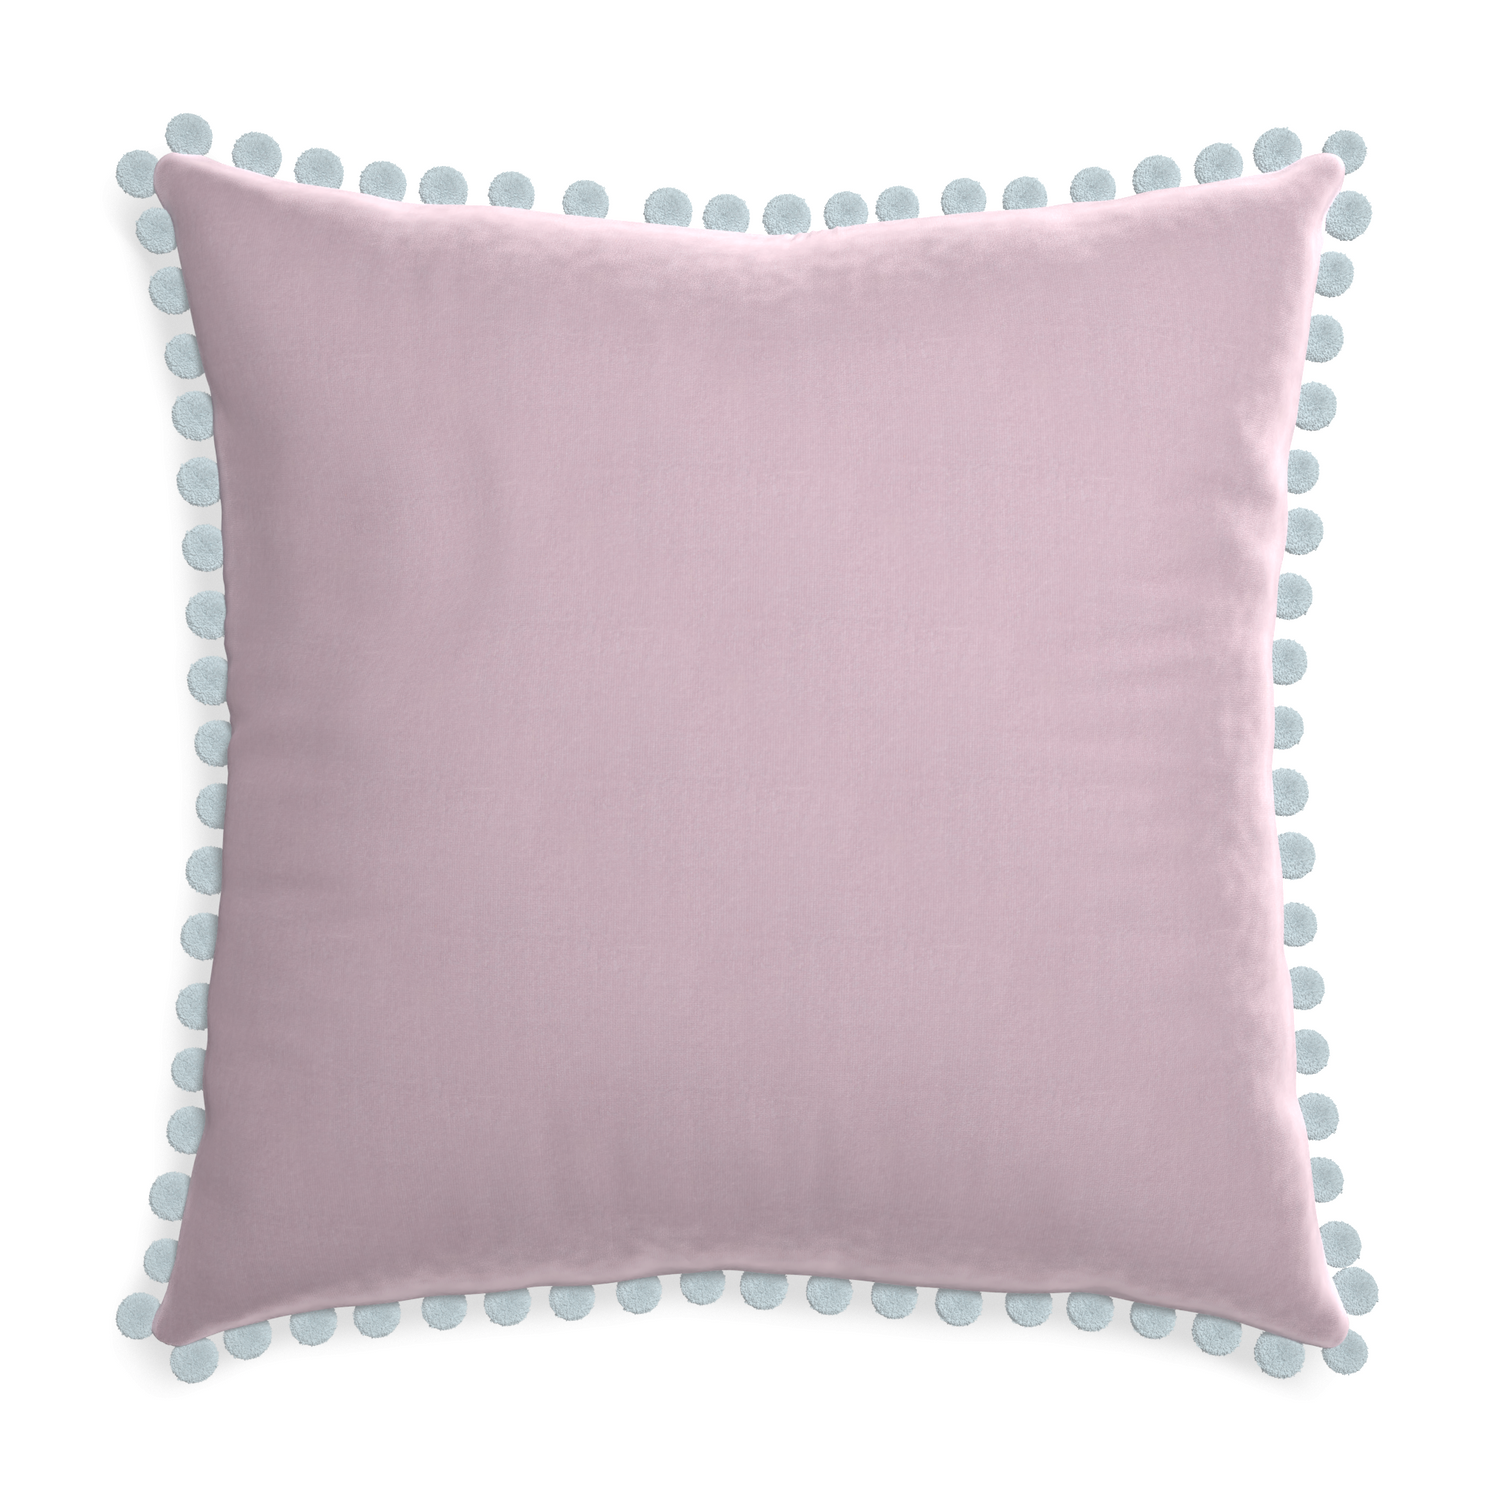 Euro-sham lilac velvet custom pillow with powder pom pom on white background